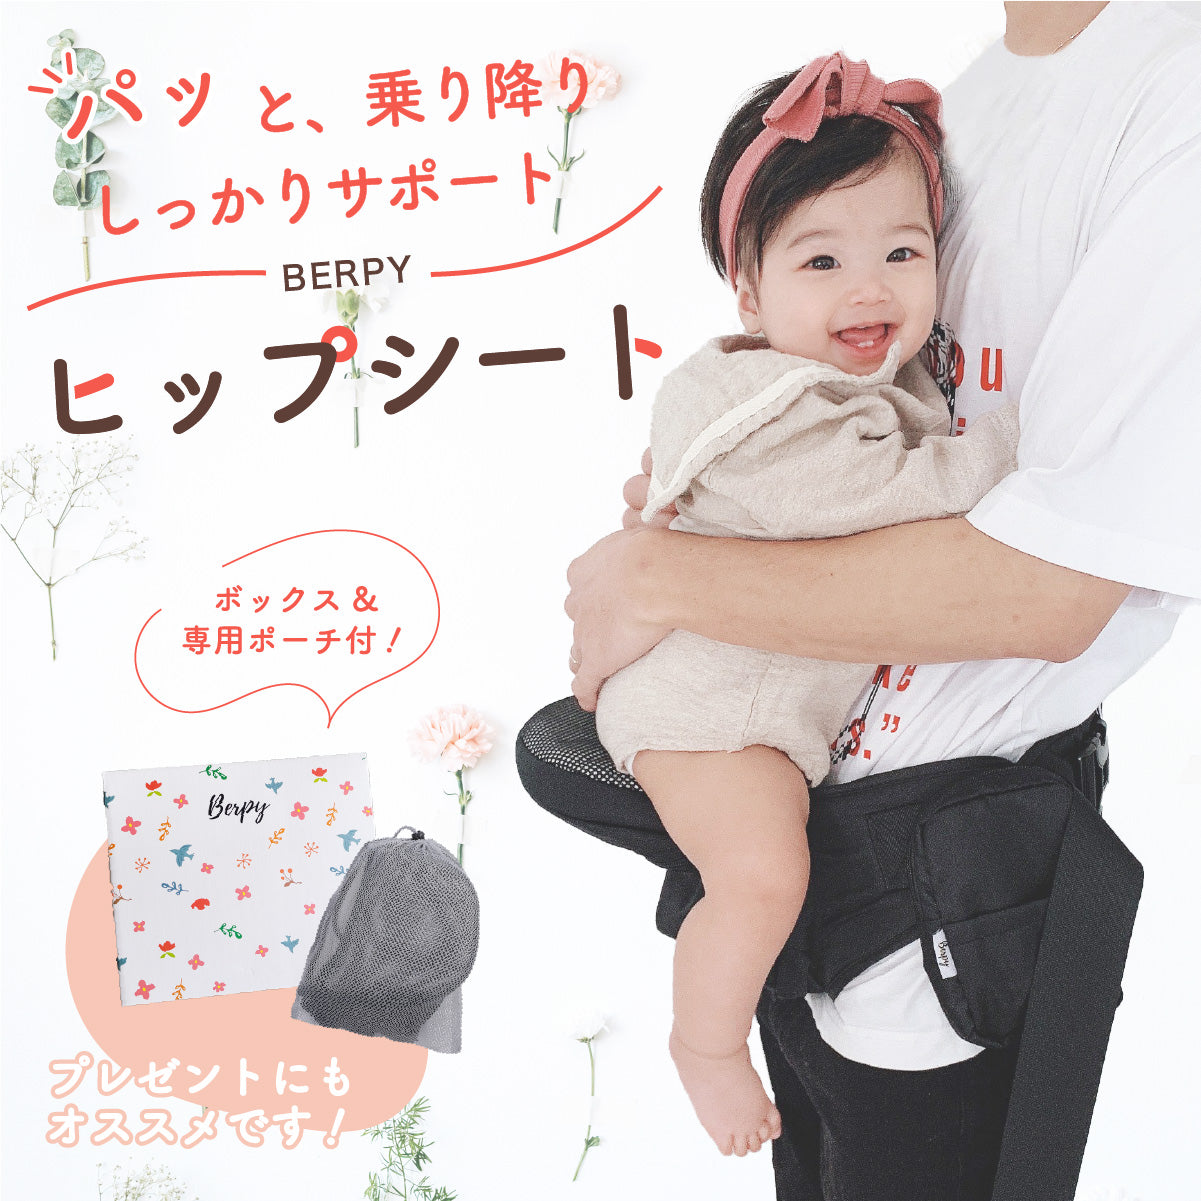 BERPY (バーピー) ヒップシート 抱っこ紐 新生児 可変シート 折り畳み可能 人気 おすすめ 耐荷重20kg